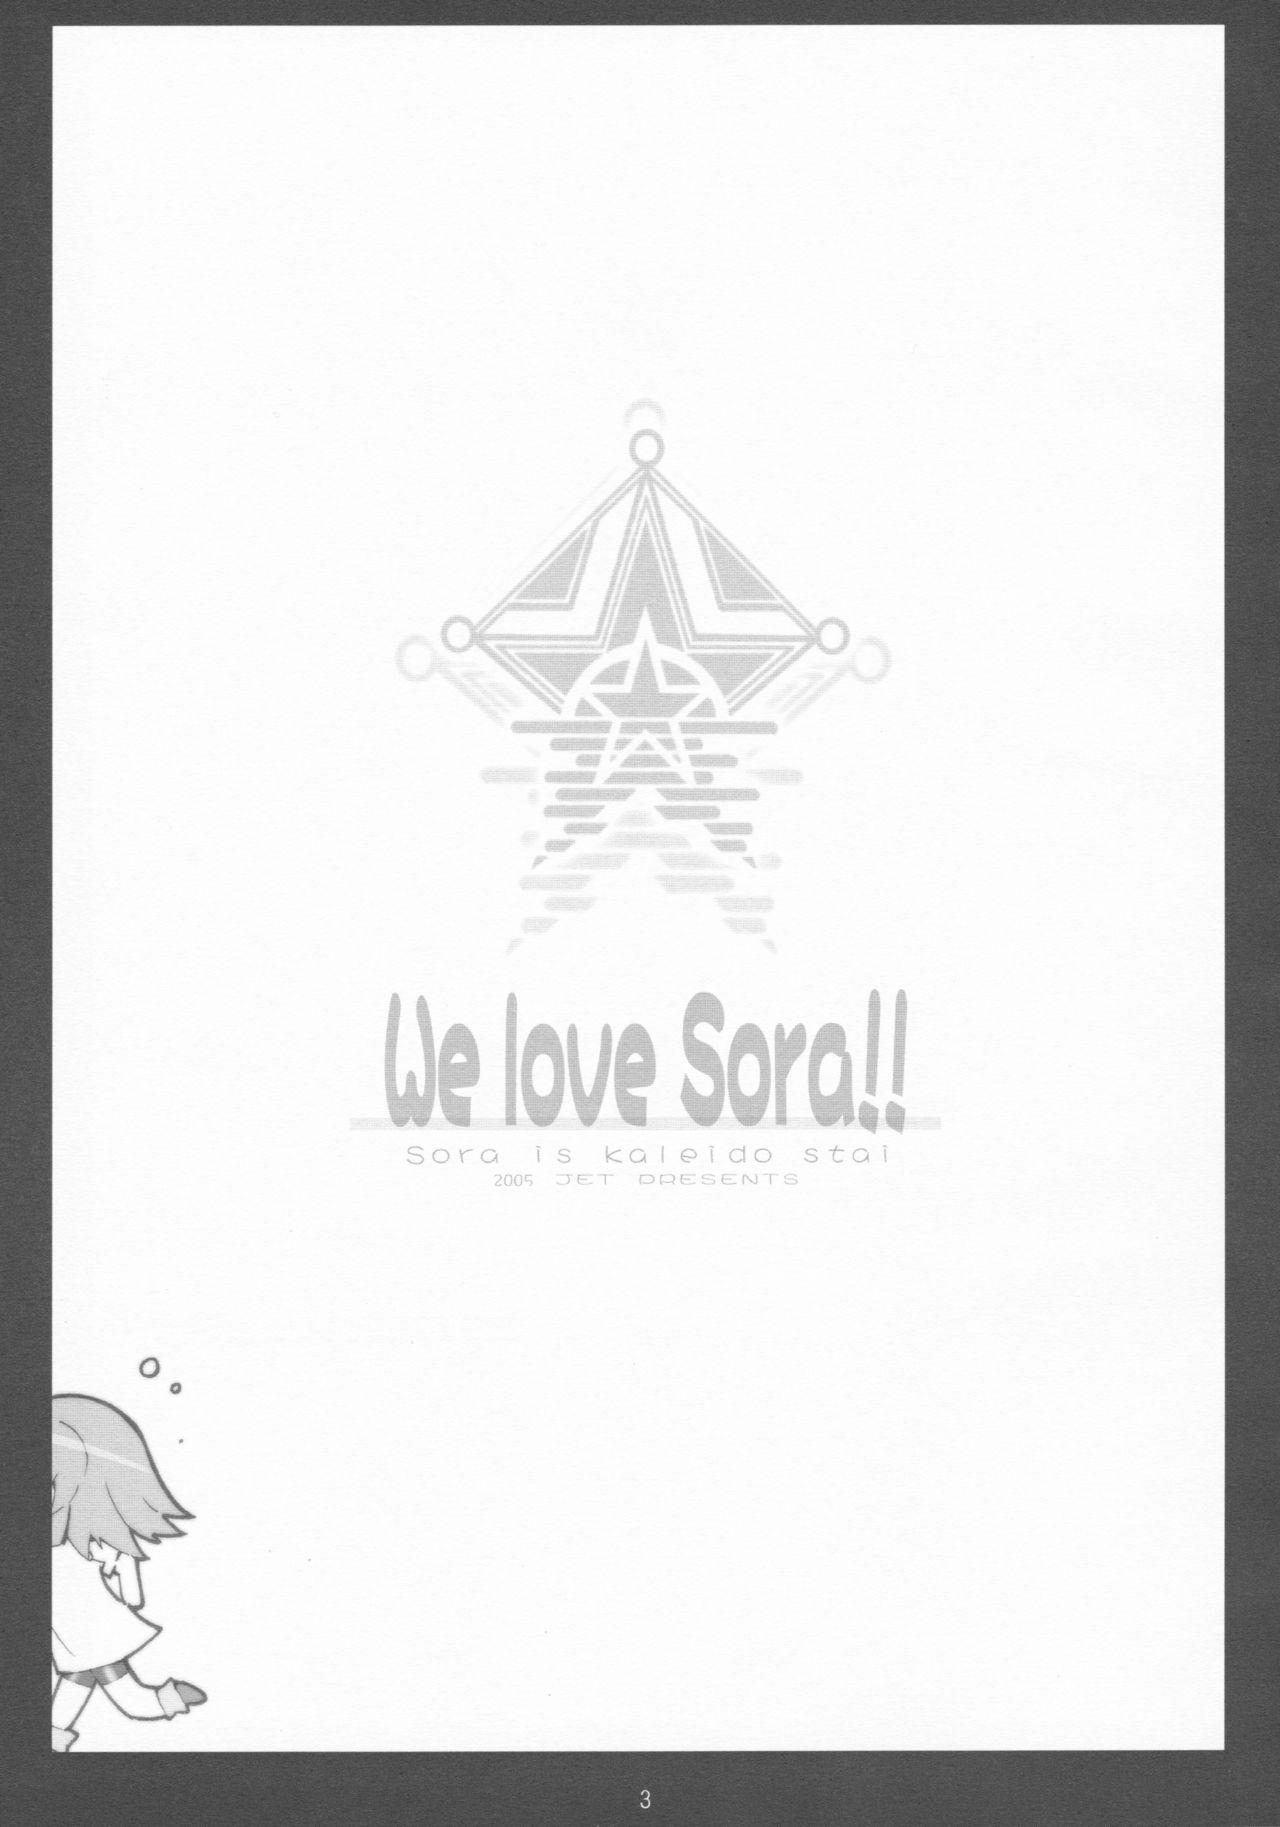 We love Sora!! 1